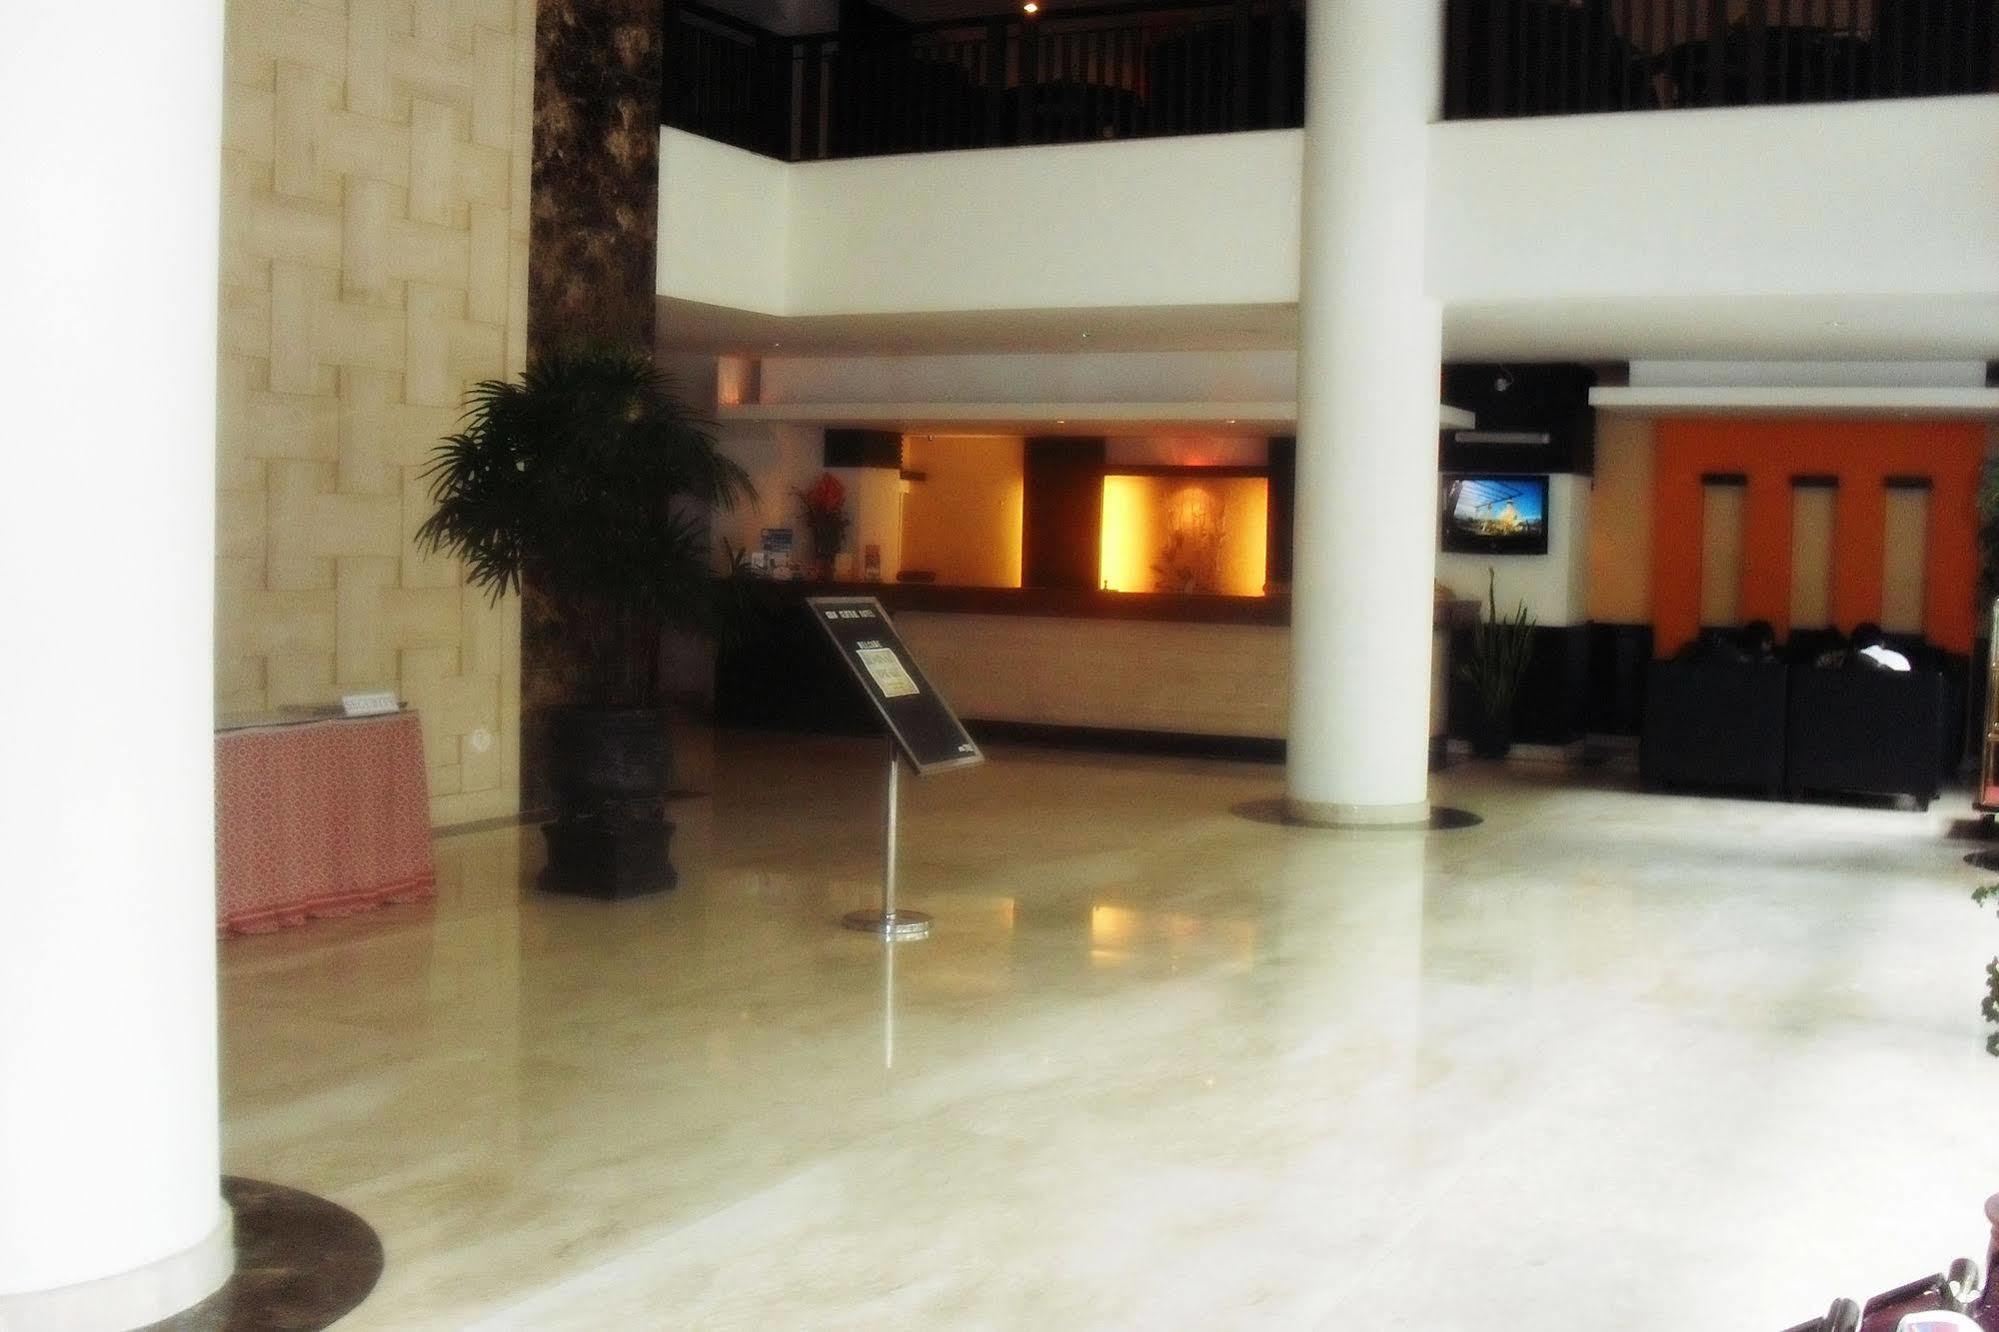 Hotel Gran Central Manado Exterior photo